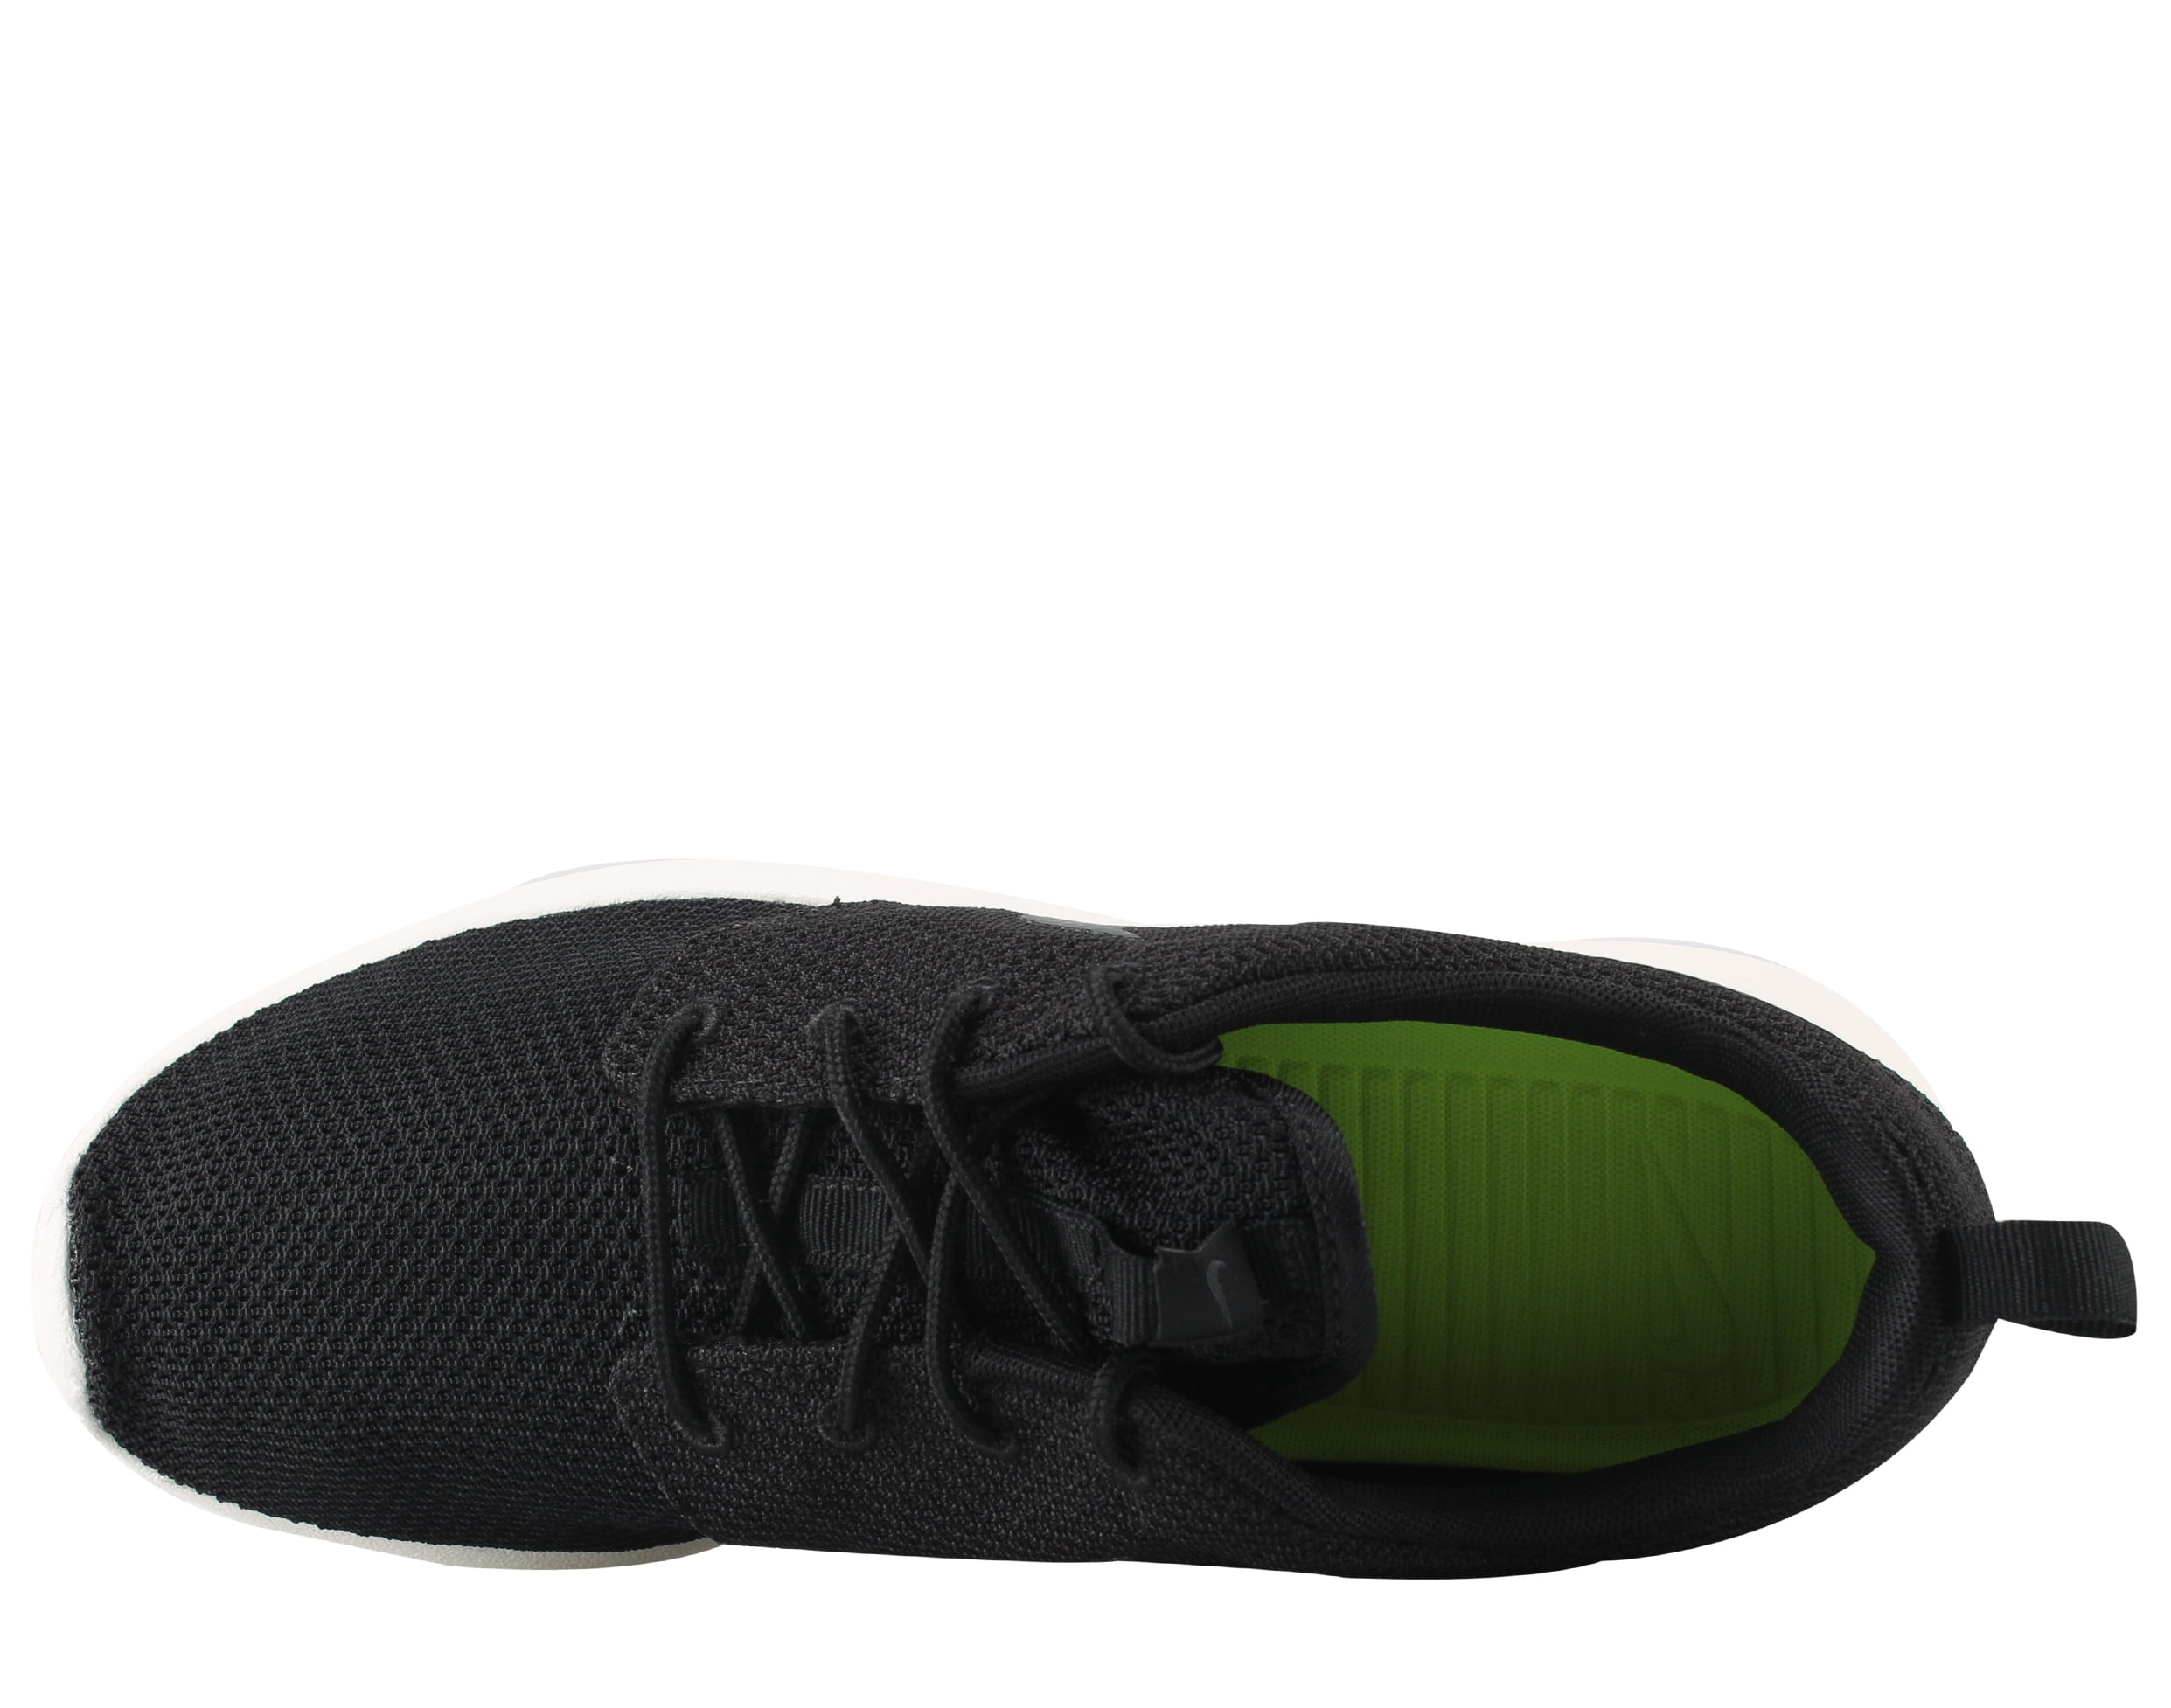 reflujo Lo anterior plan Nike Roshe Run One Men's Shoes Black/Anthracite-Sail 511881-010 -  Walmart.com